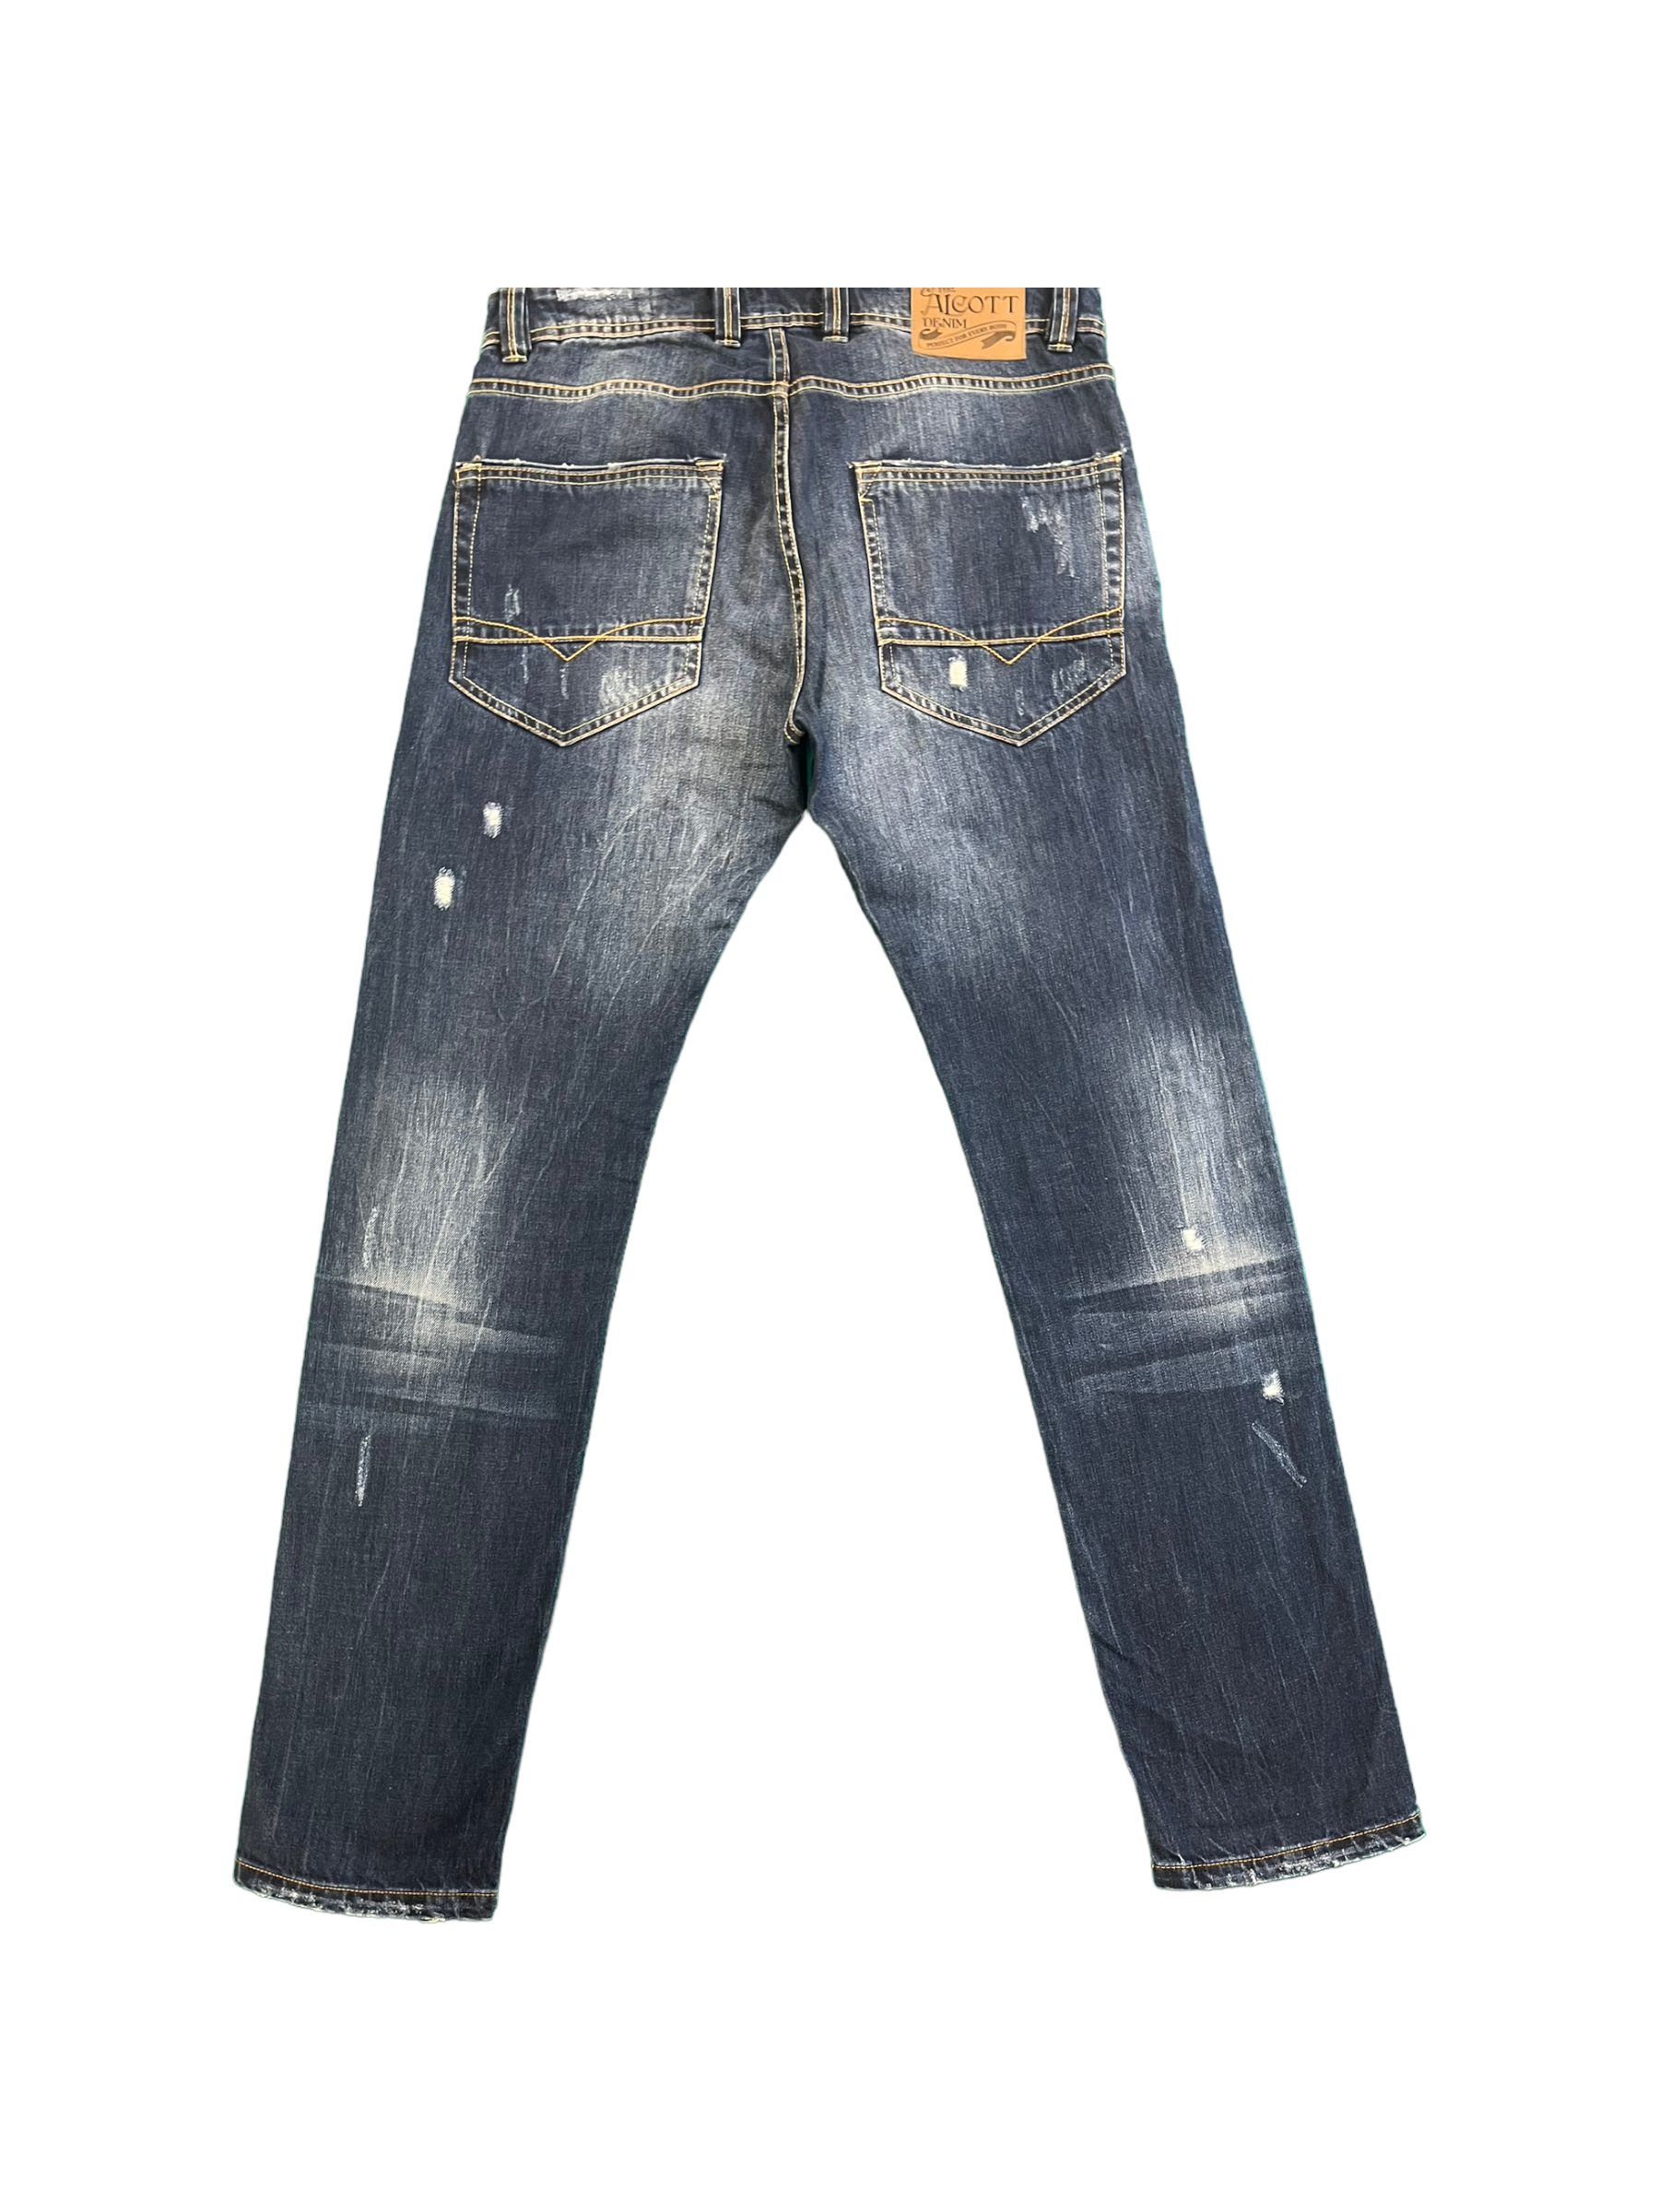 Mens Distressed Darkwash Jeans - Waist 36" Length 34"